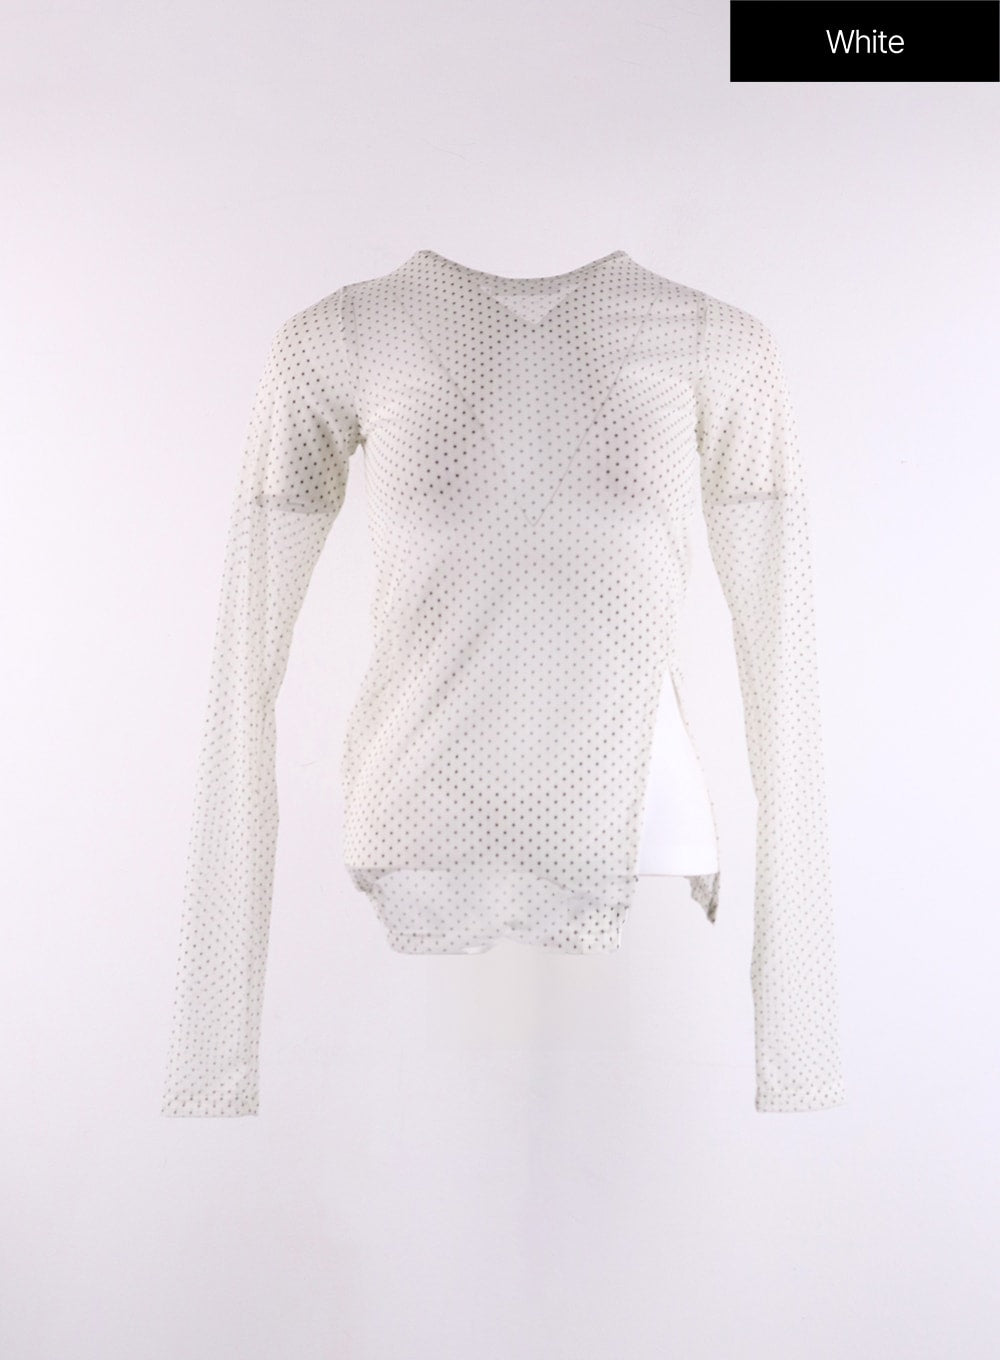 White Fishnet Shirt -  Canada